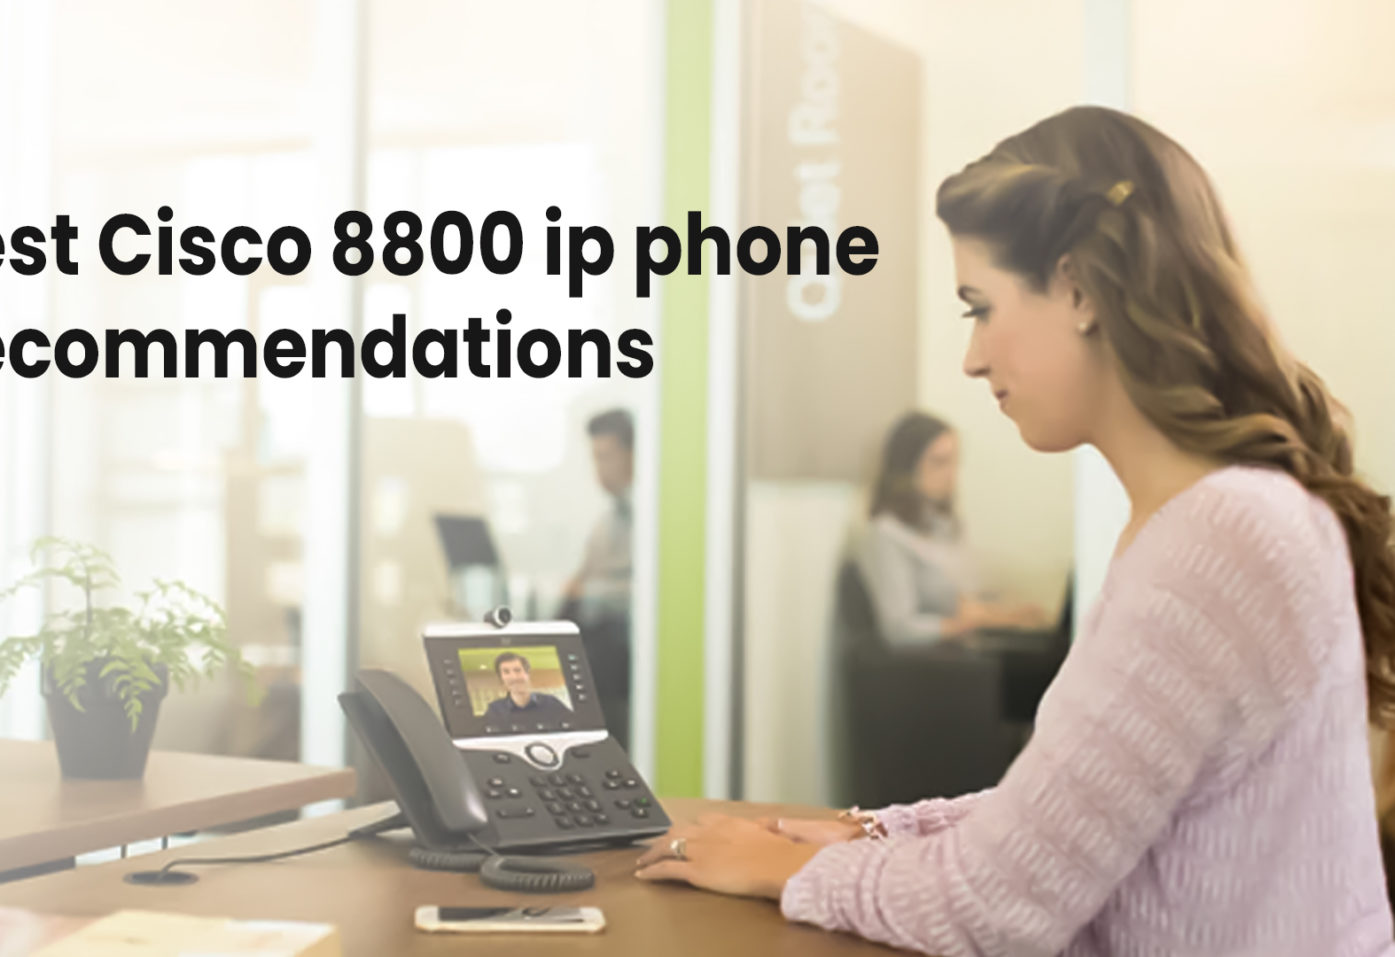 Best Cisco 8800 ip phone recommendations